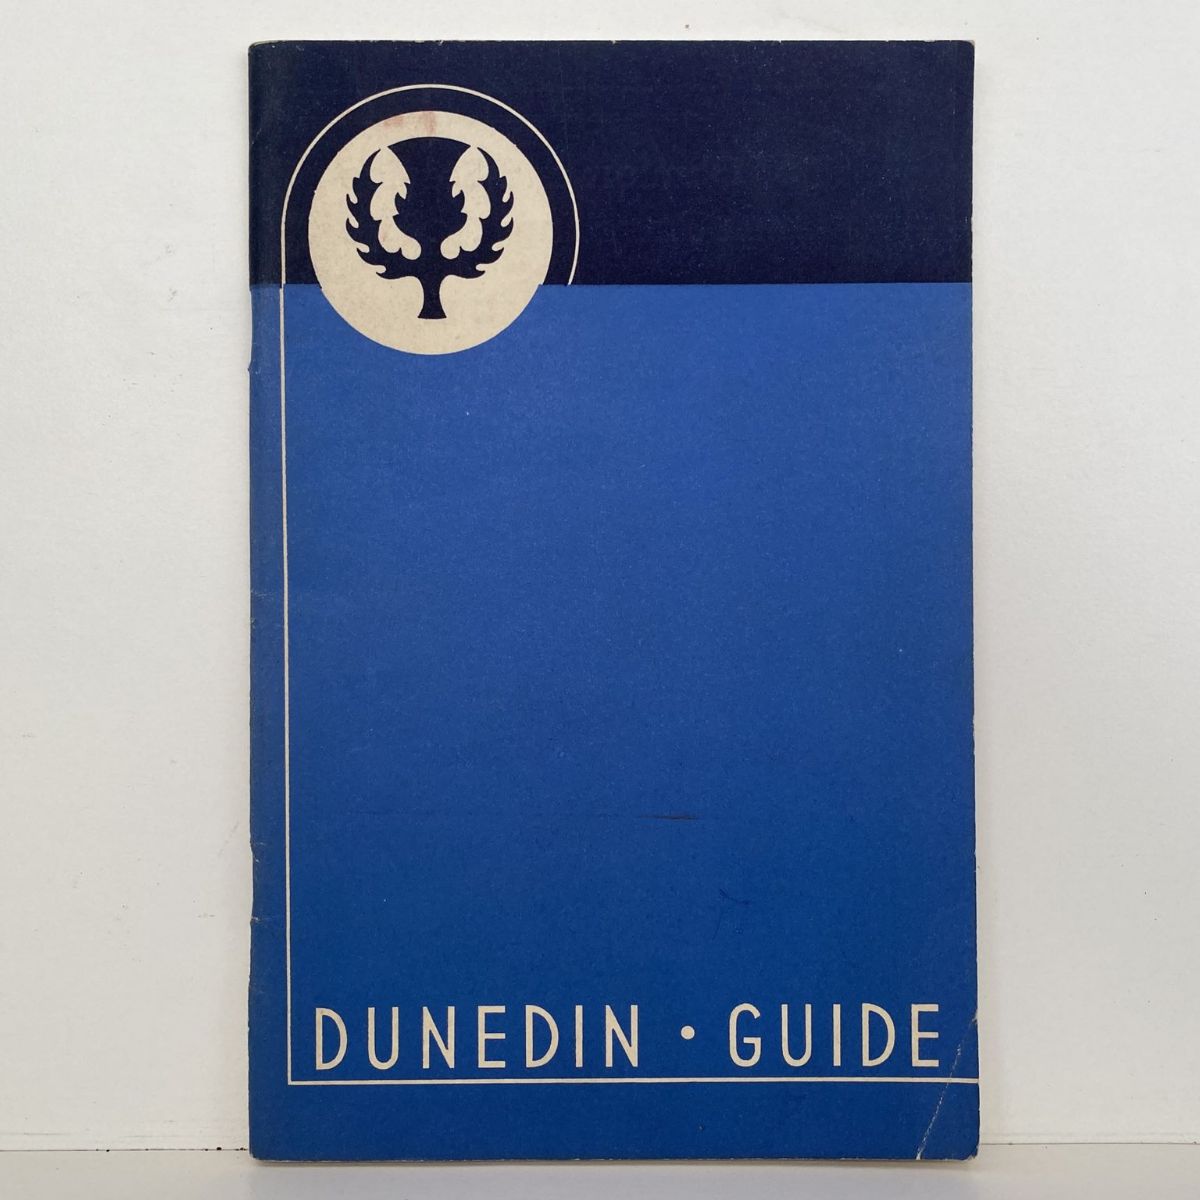 DUNEDIN Guide - Edinburgh of the South